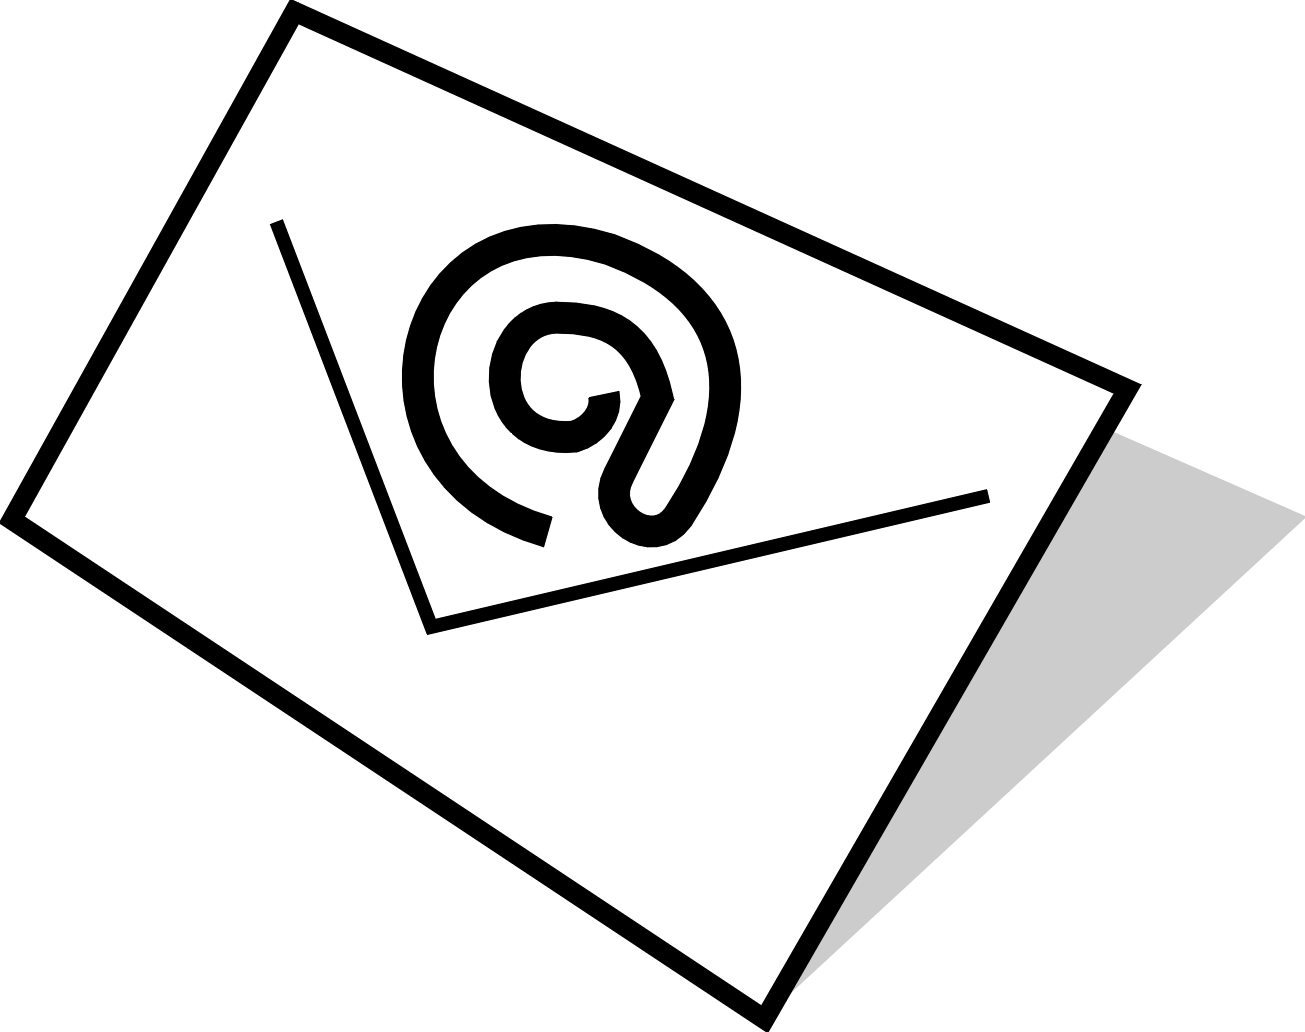 Email logo clip art at vector clip art image